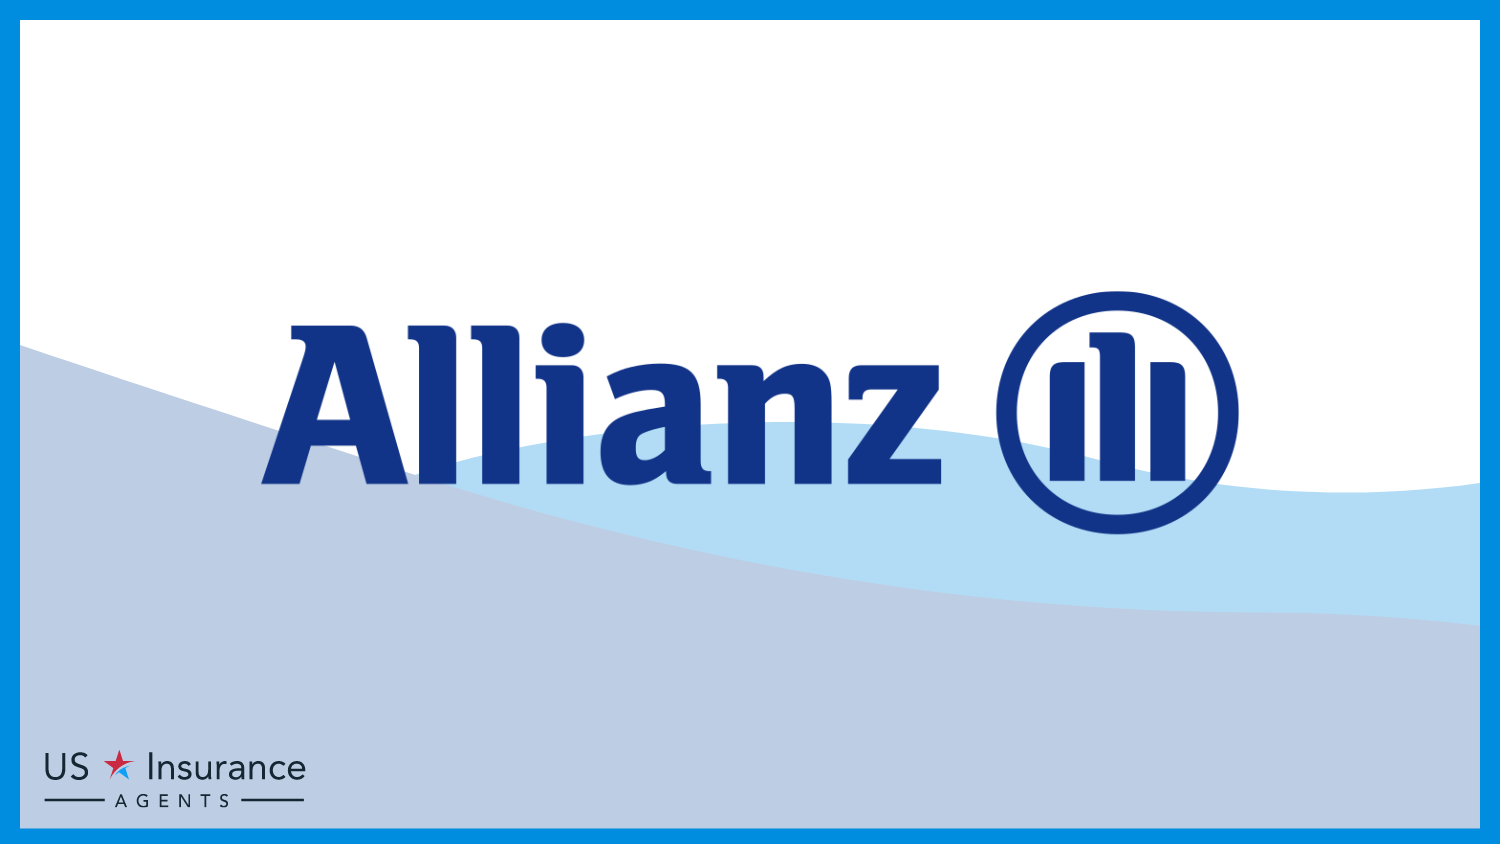 Allianz: Best Business Insurance for Non-Profits